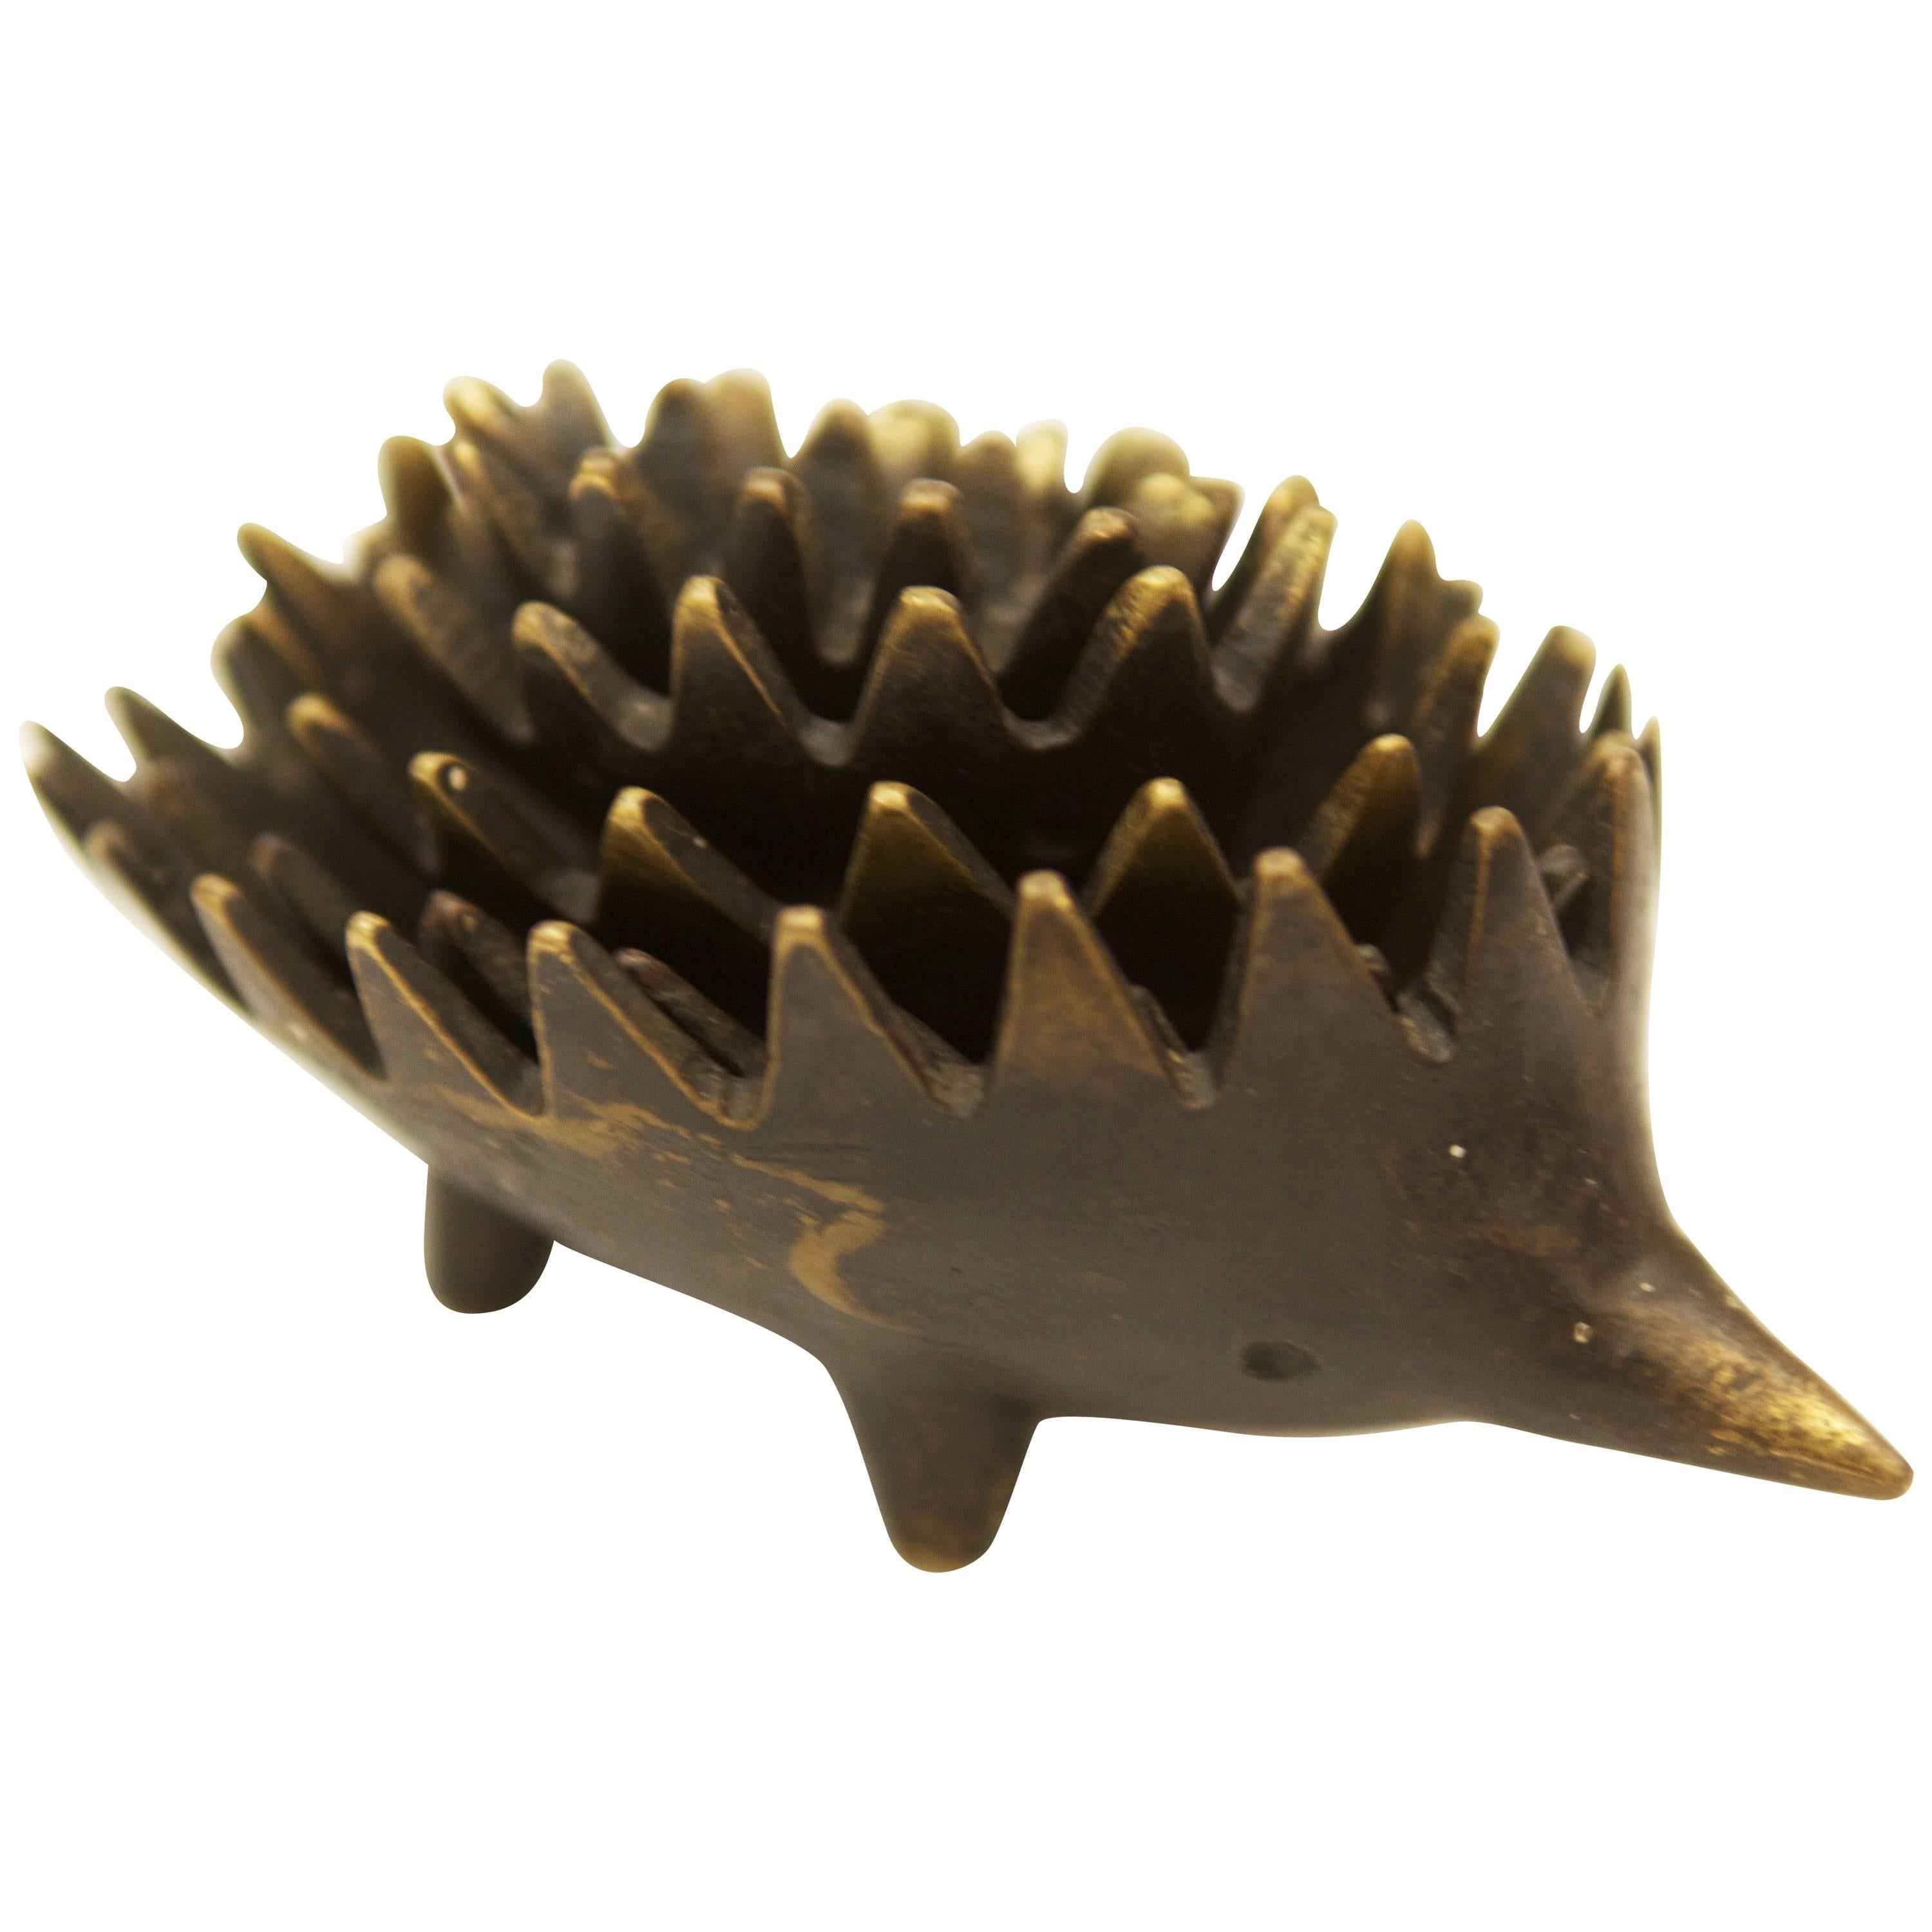 Hedgehog Sculpture by Walter Bosse for Hertha Baller 